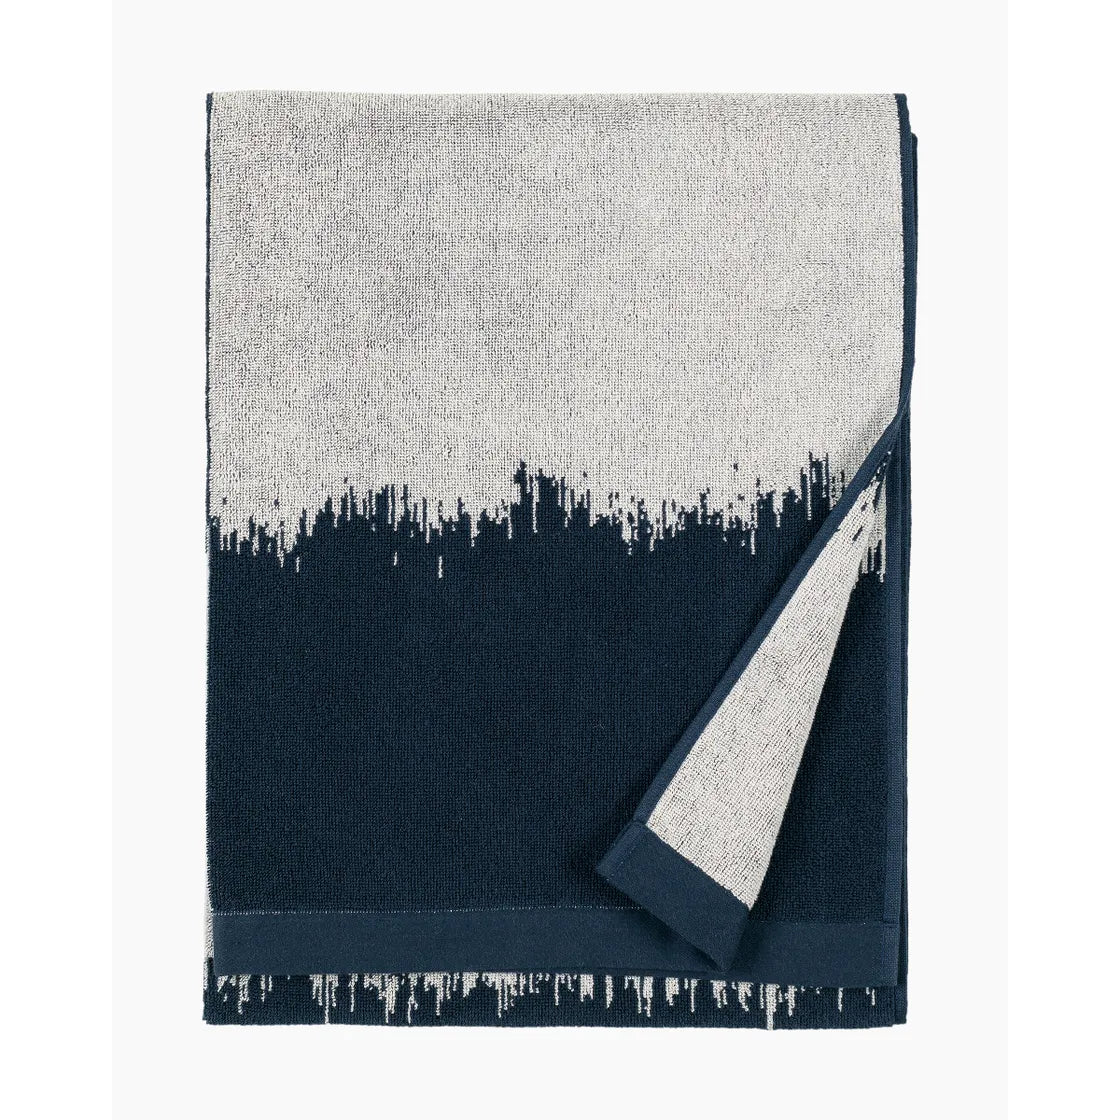 Ostjakki bath towel 70x150 cm dark blue / off white 070723 850